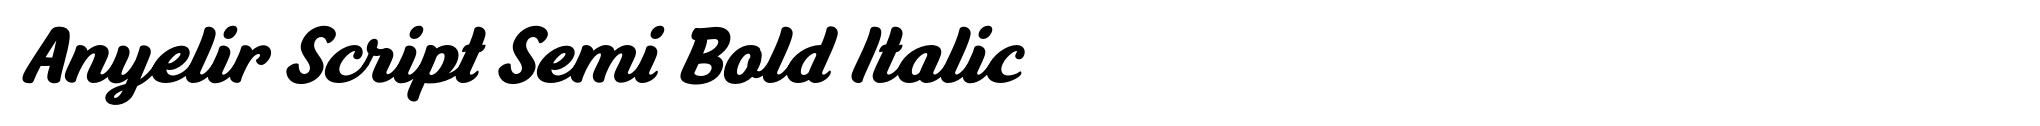 Anyelir Script Semi Bold Italic image